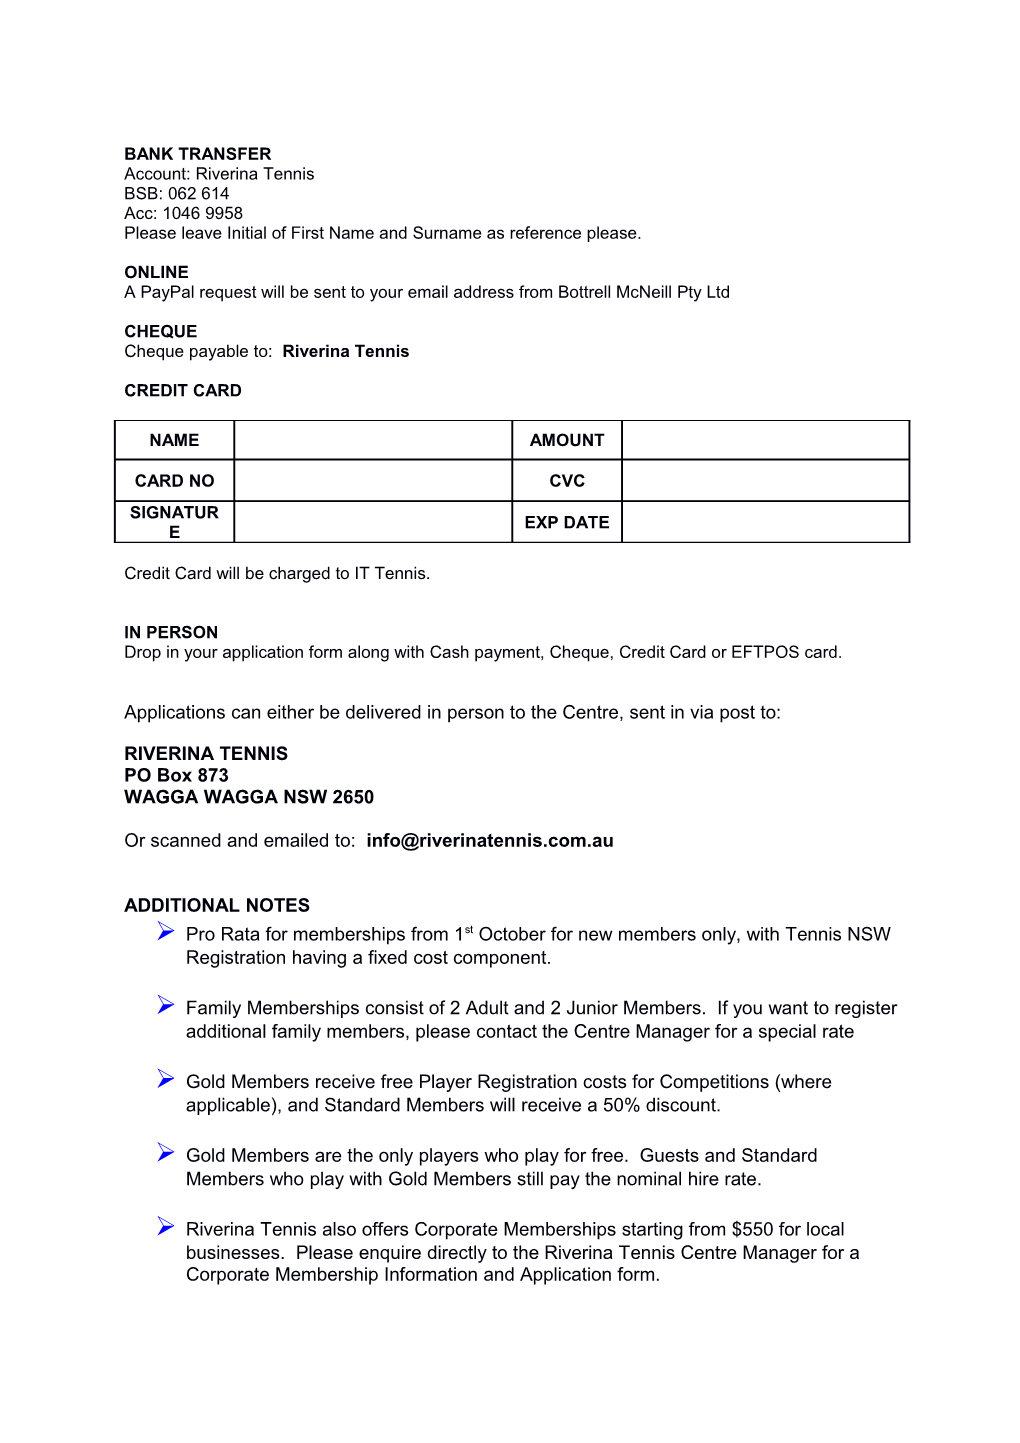 WWTA 2013/14 Membership Form